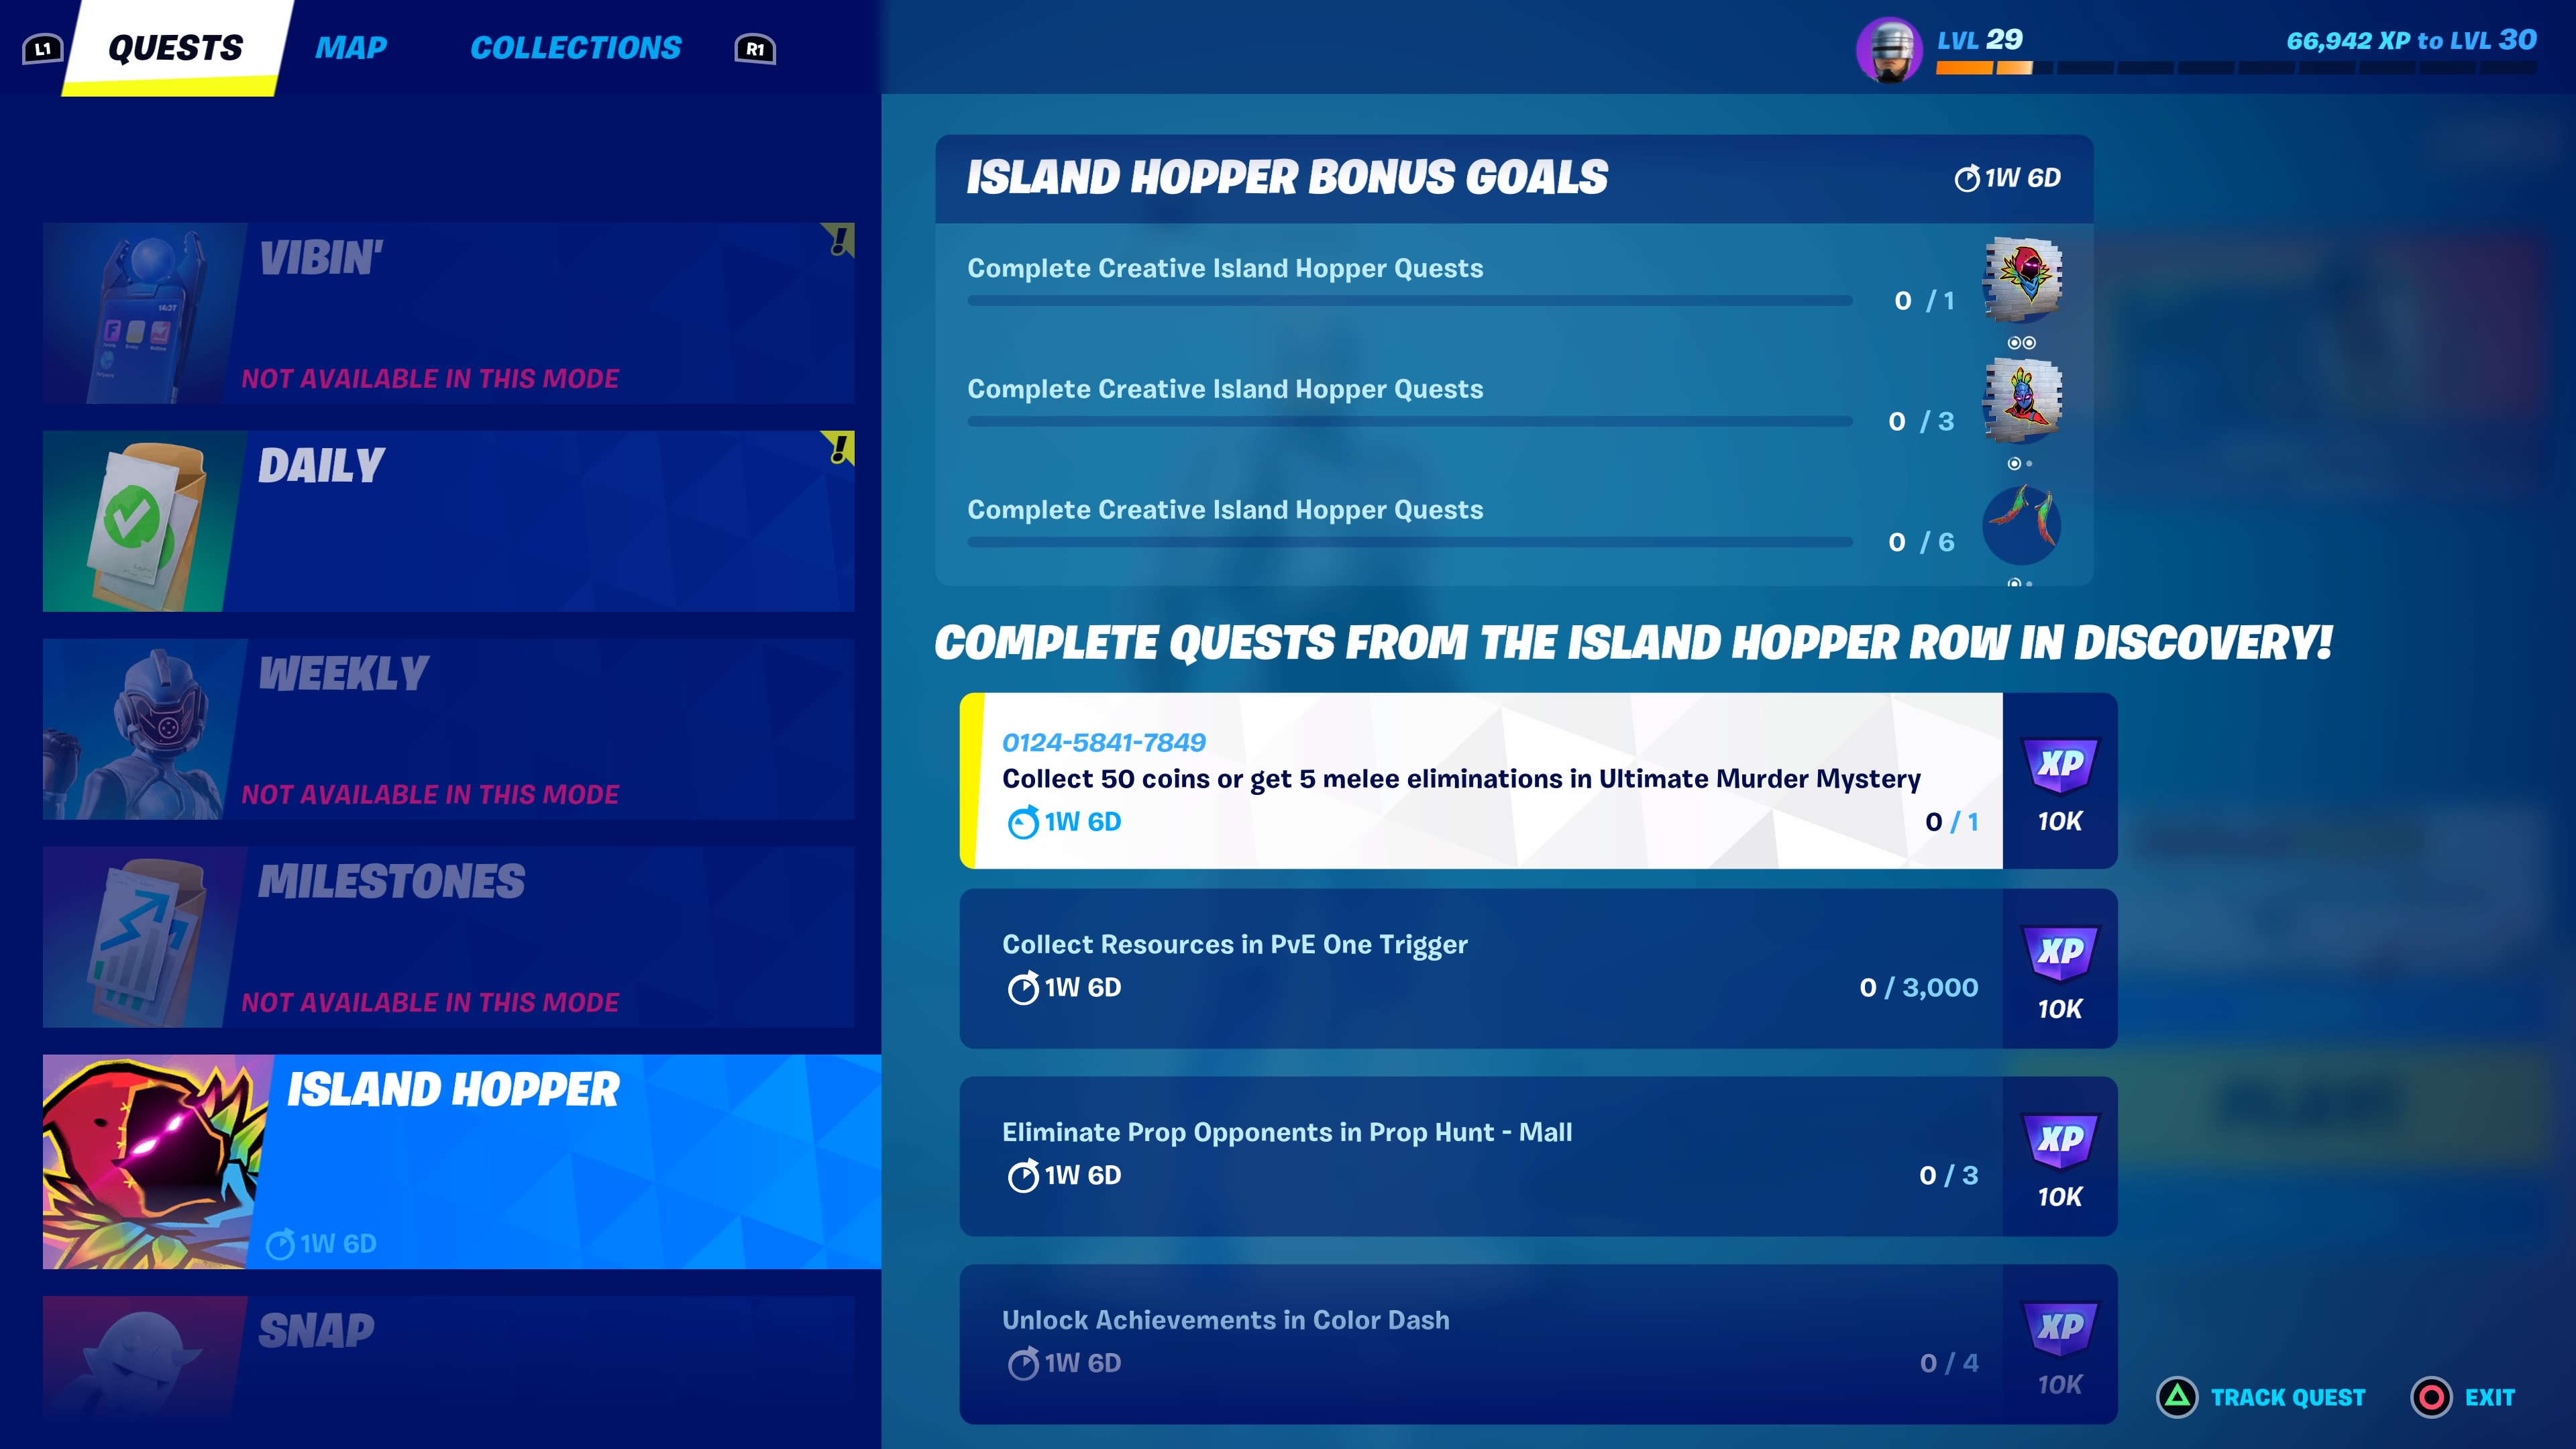 Fortnite Island Hopper game modes creative missions rewards